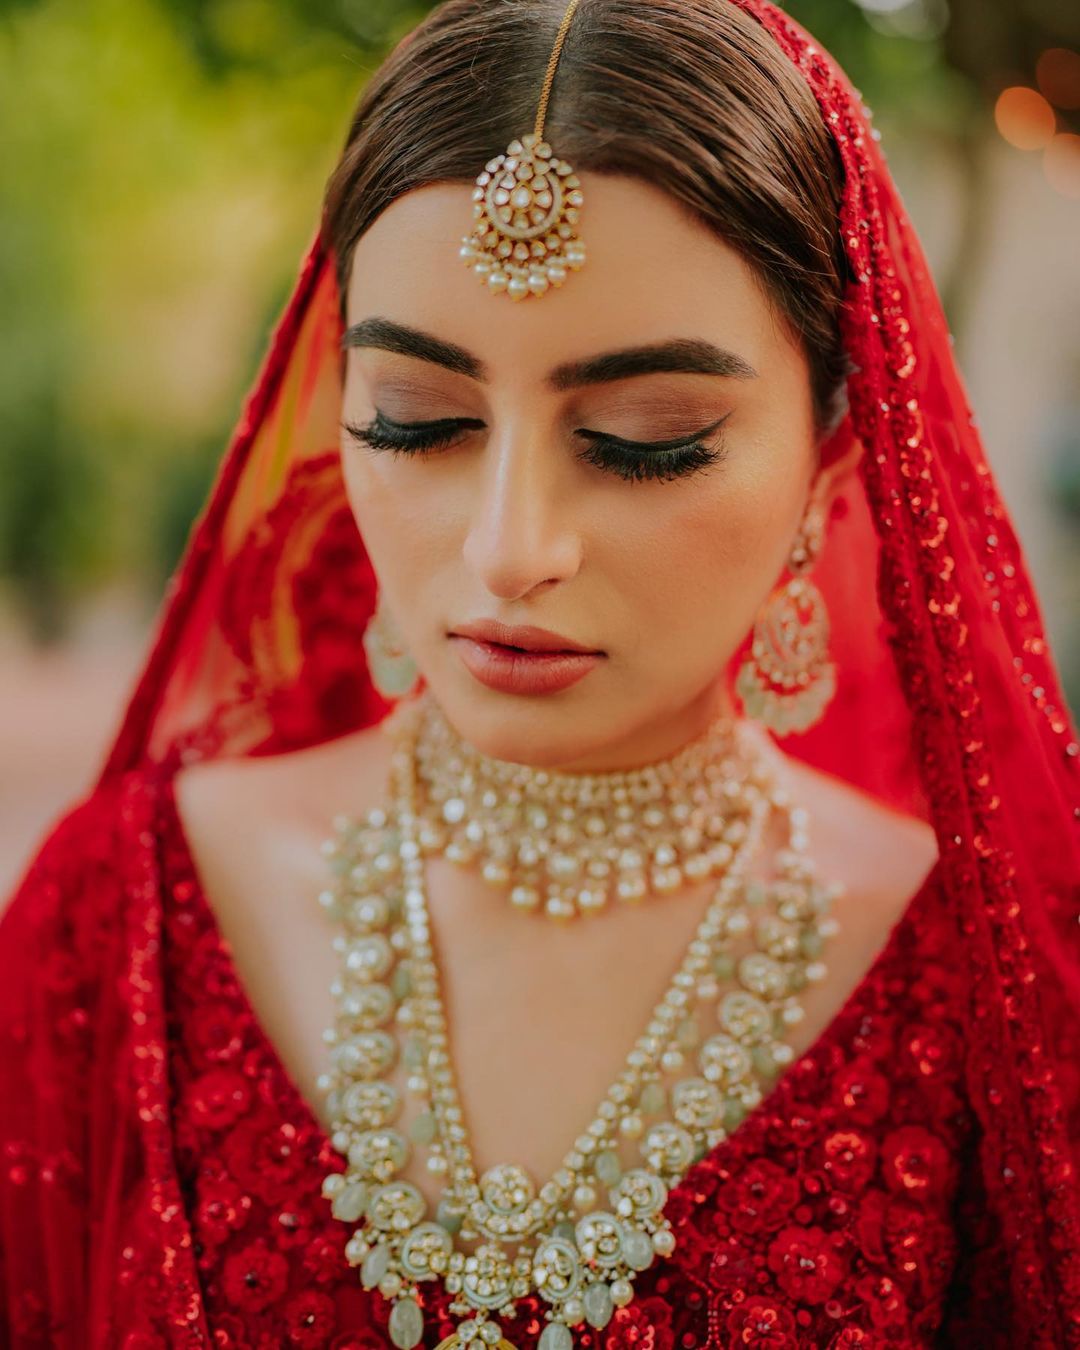 Sabyasachi Bride From Pakistan Stunned In A 'Sindoori' Red Lehenga ...